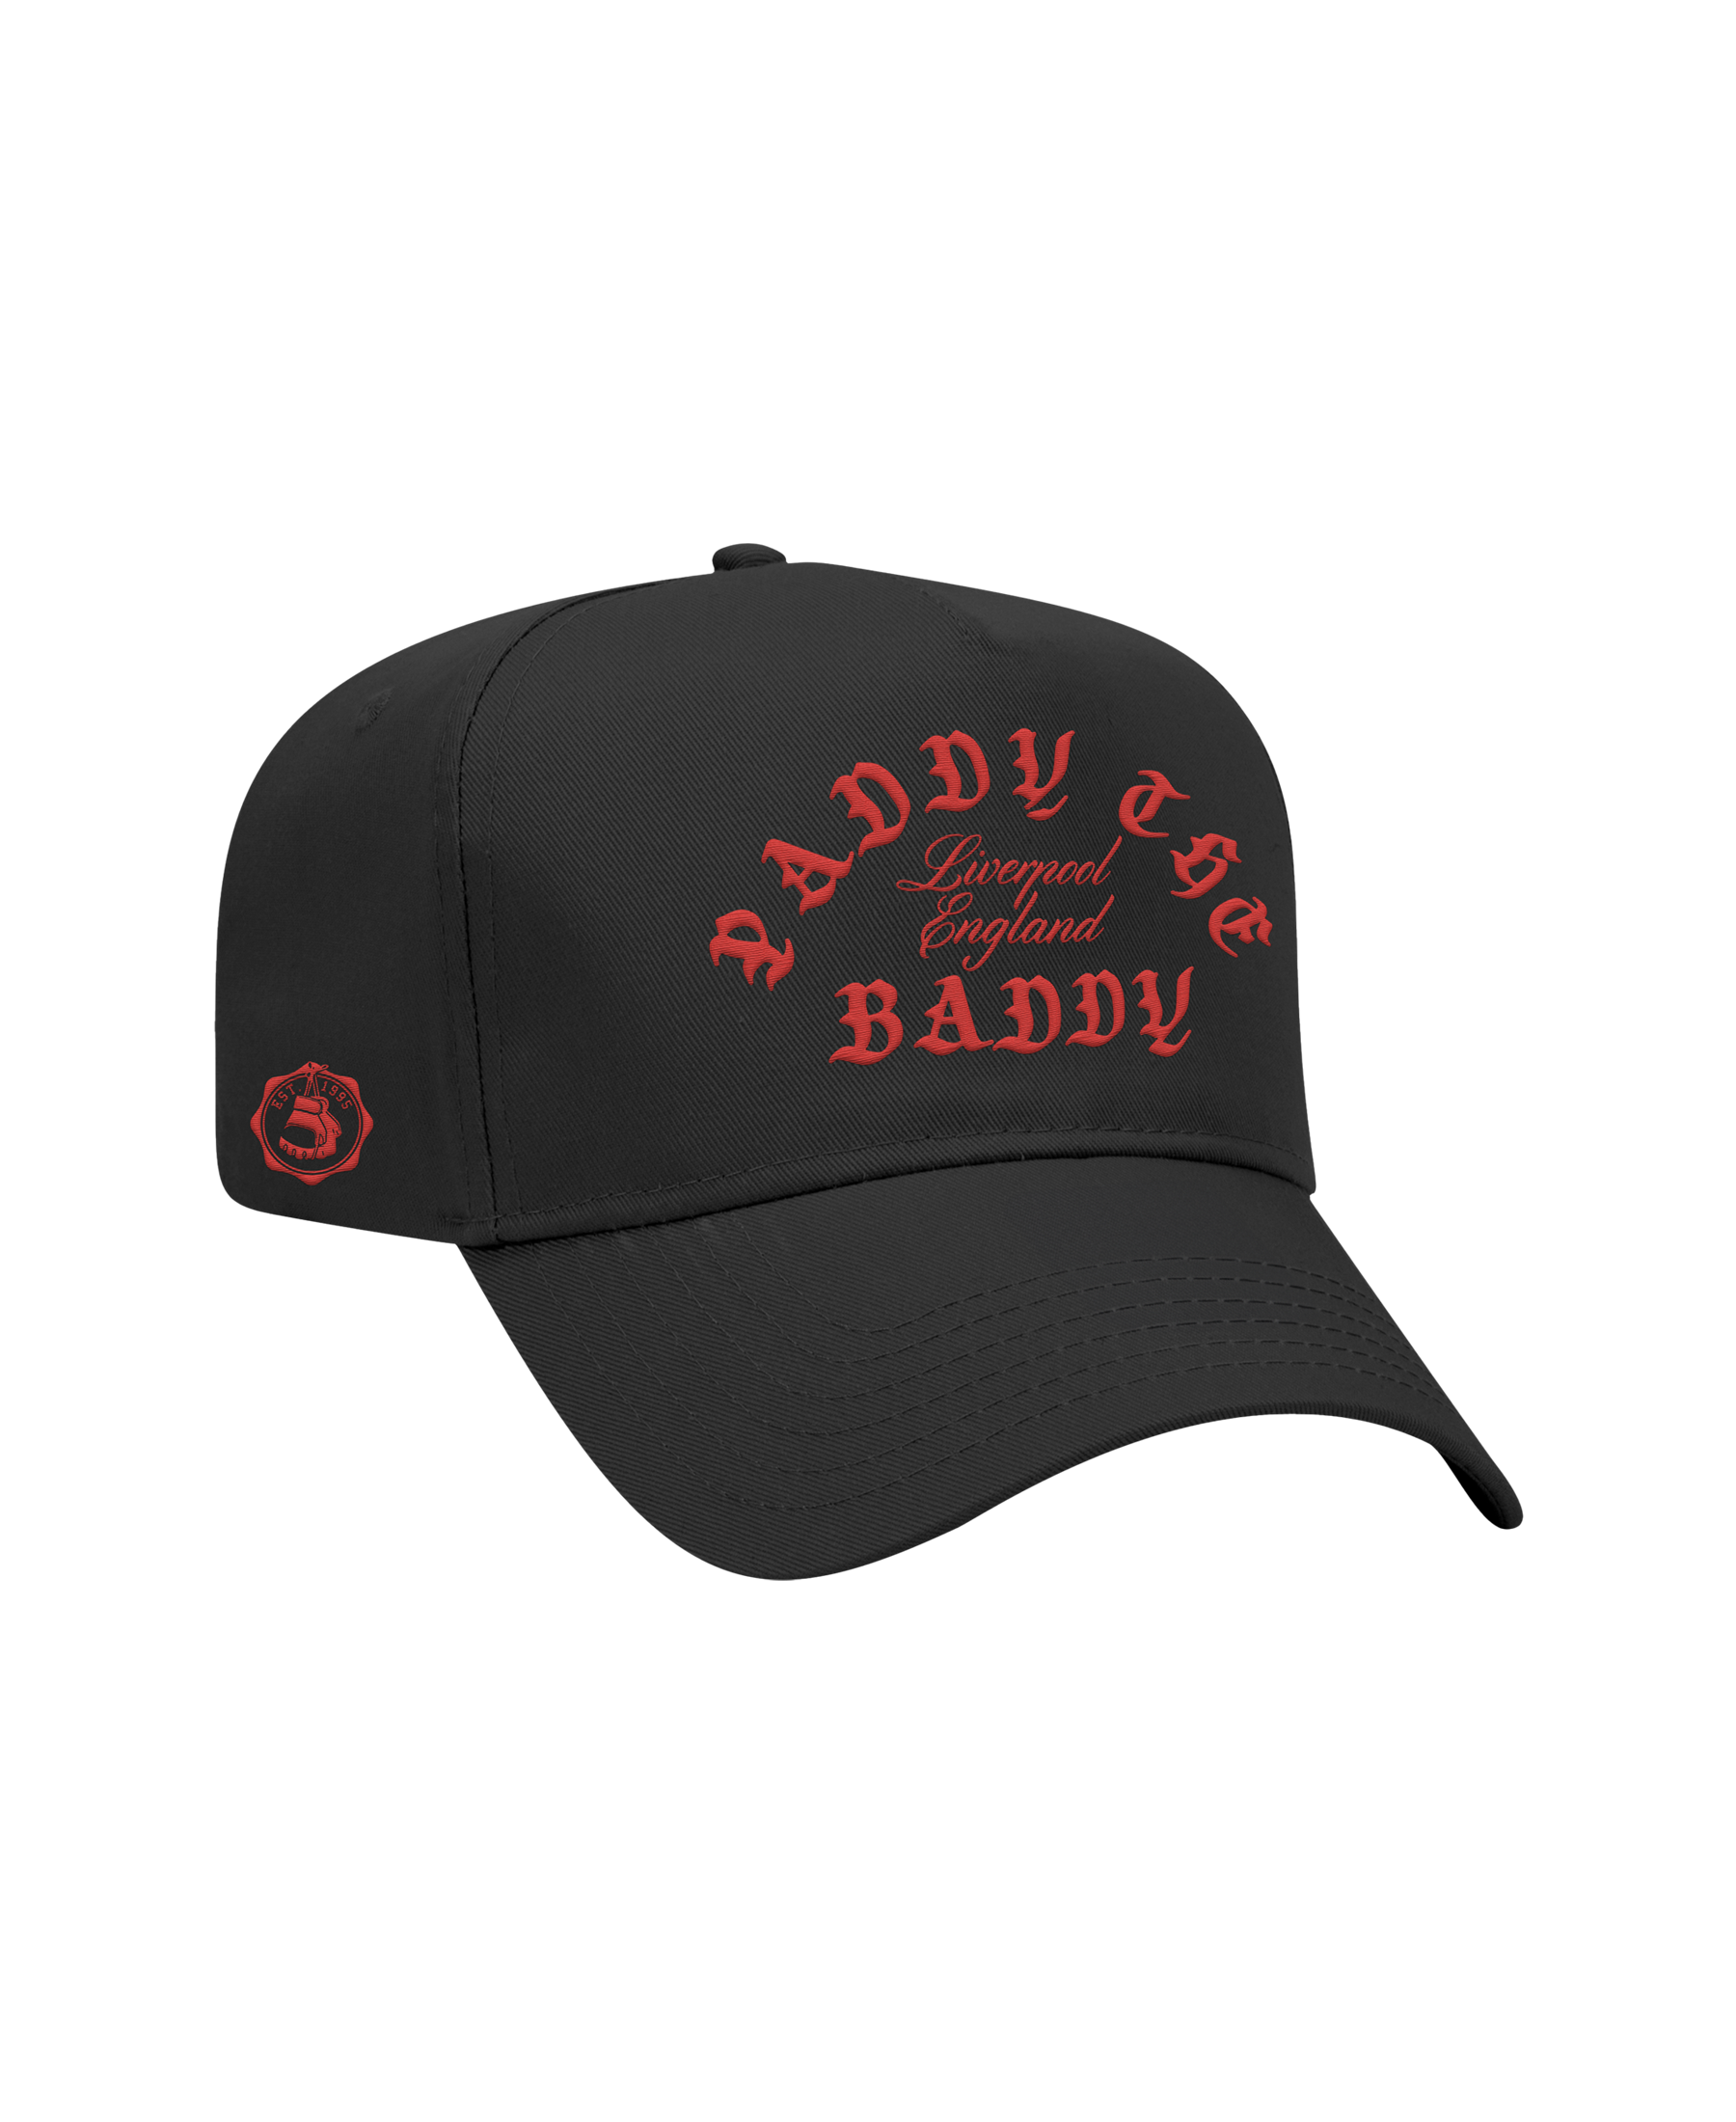 Paddy The Baddy Black Baseball Hat